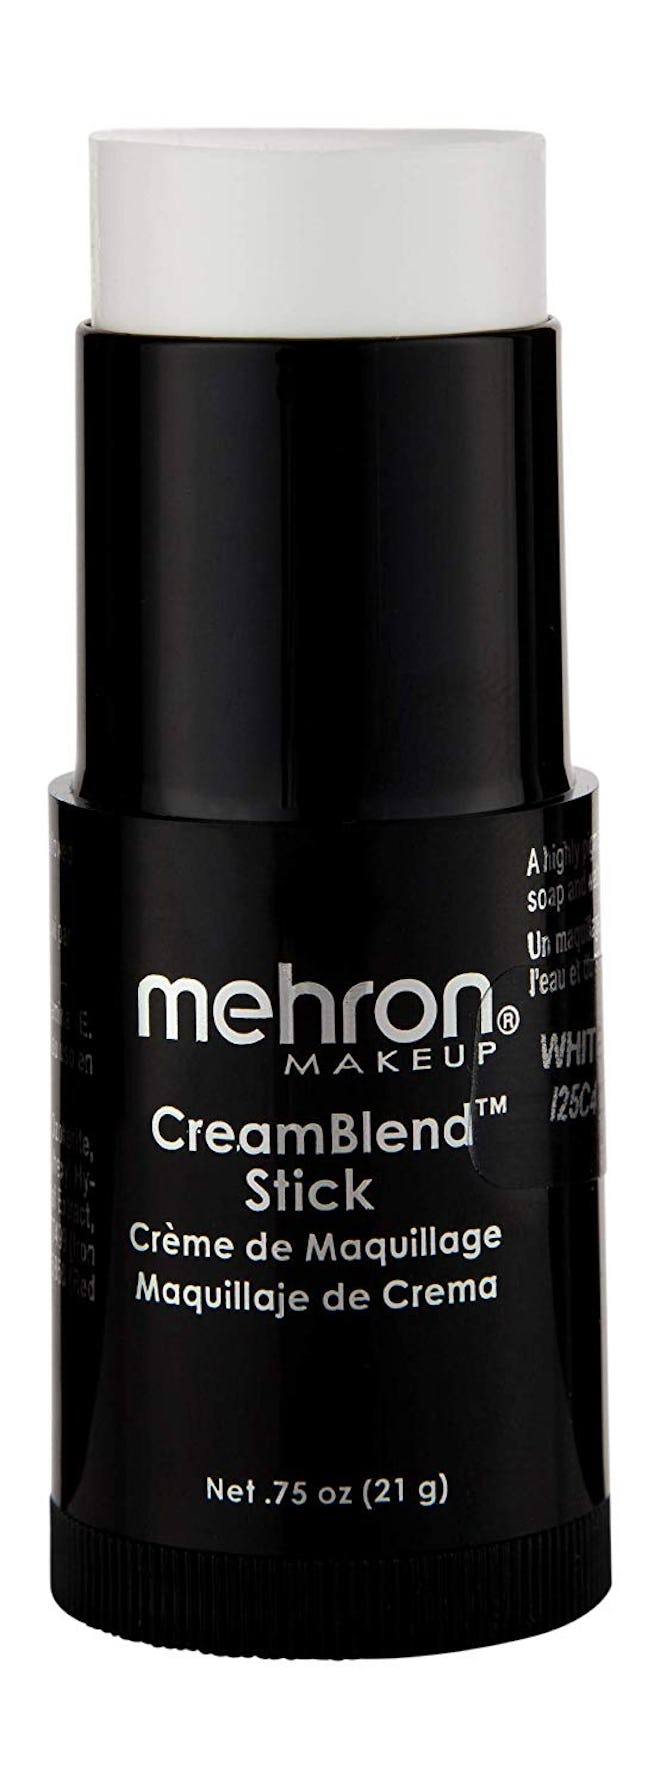 Mehron CreamBlend Stick